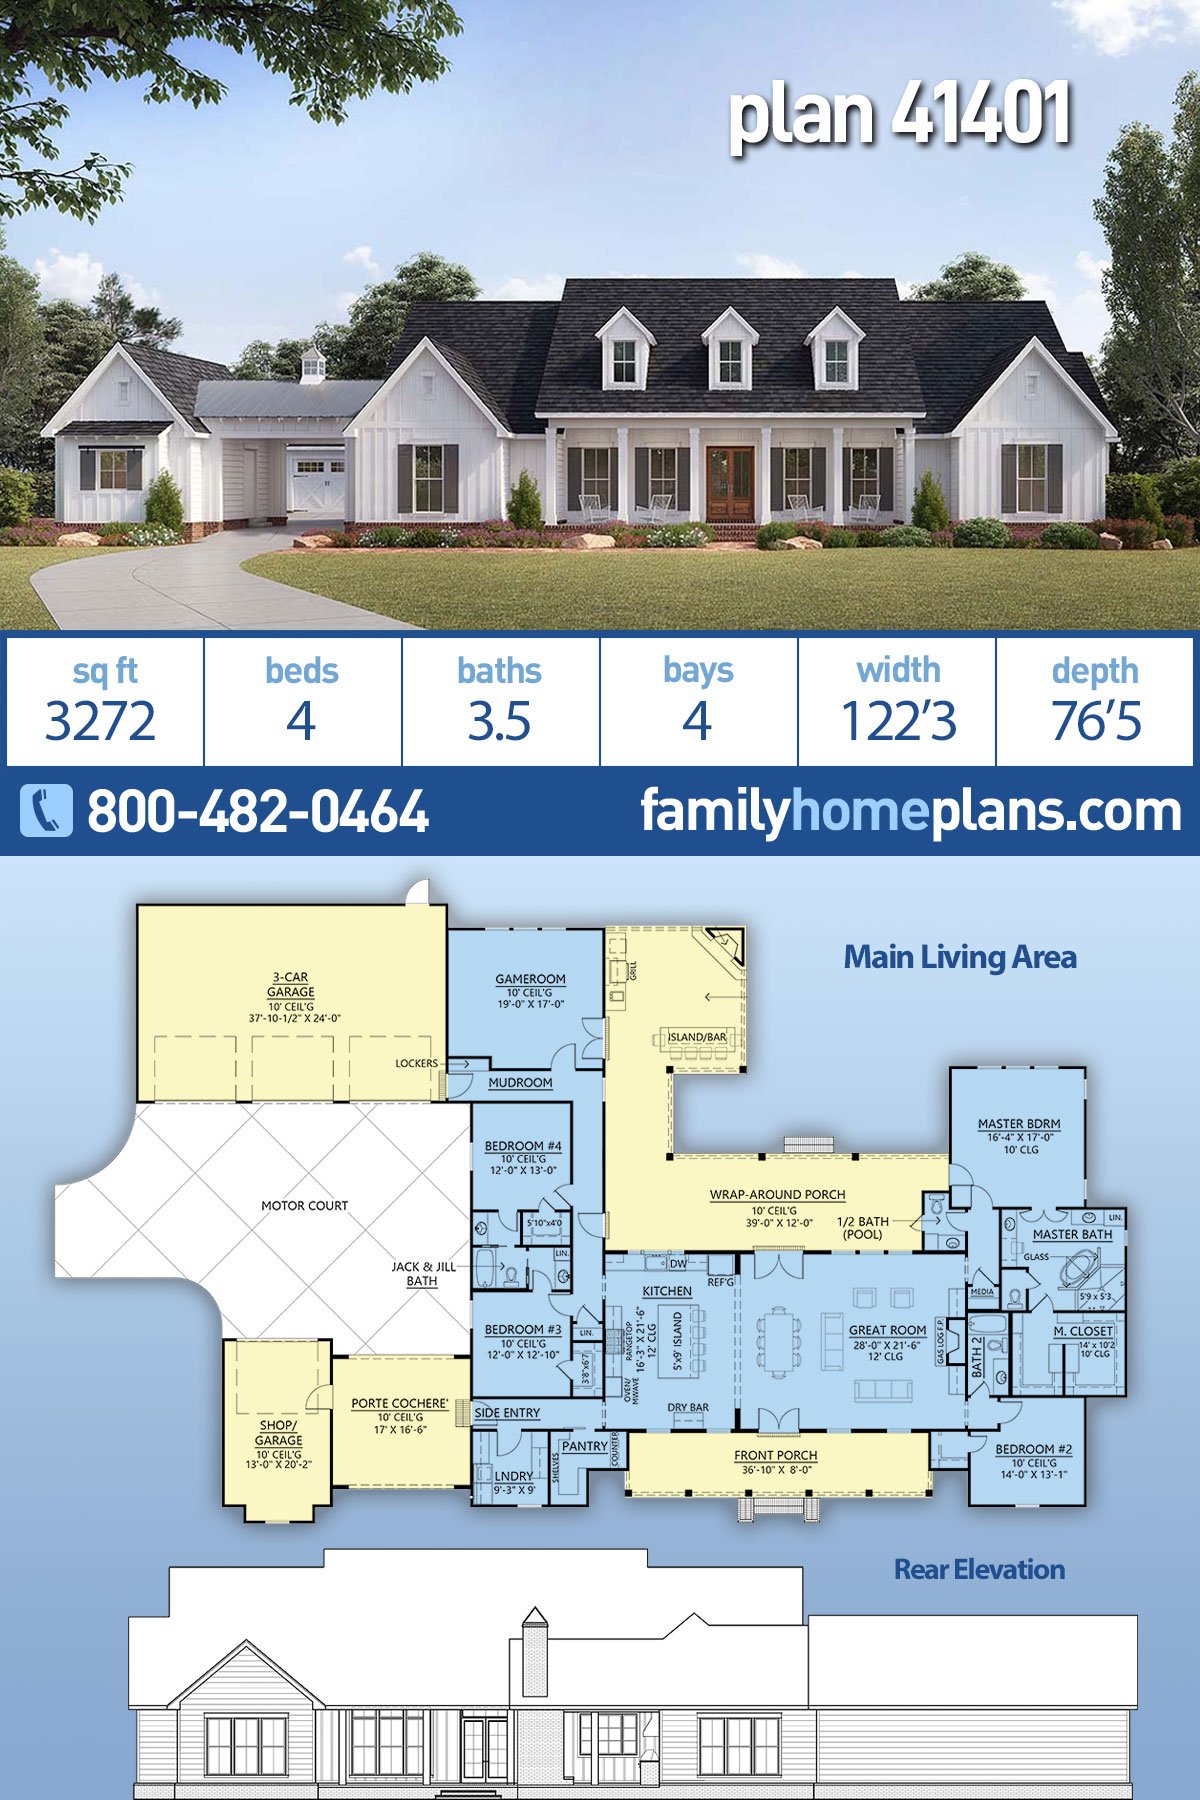 House Plan 41401